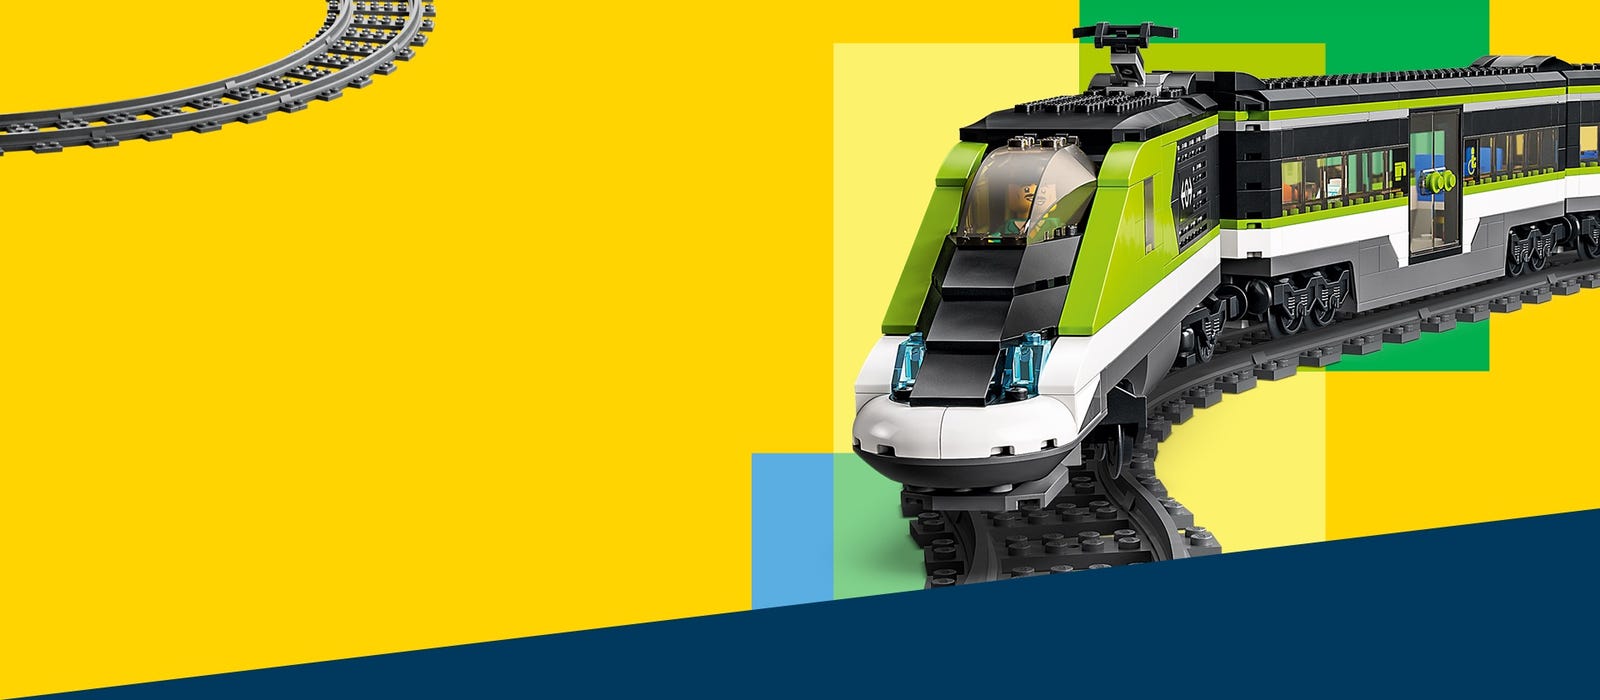 Train Toys u0026 Track Sets | Official LEGO® Shop GB